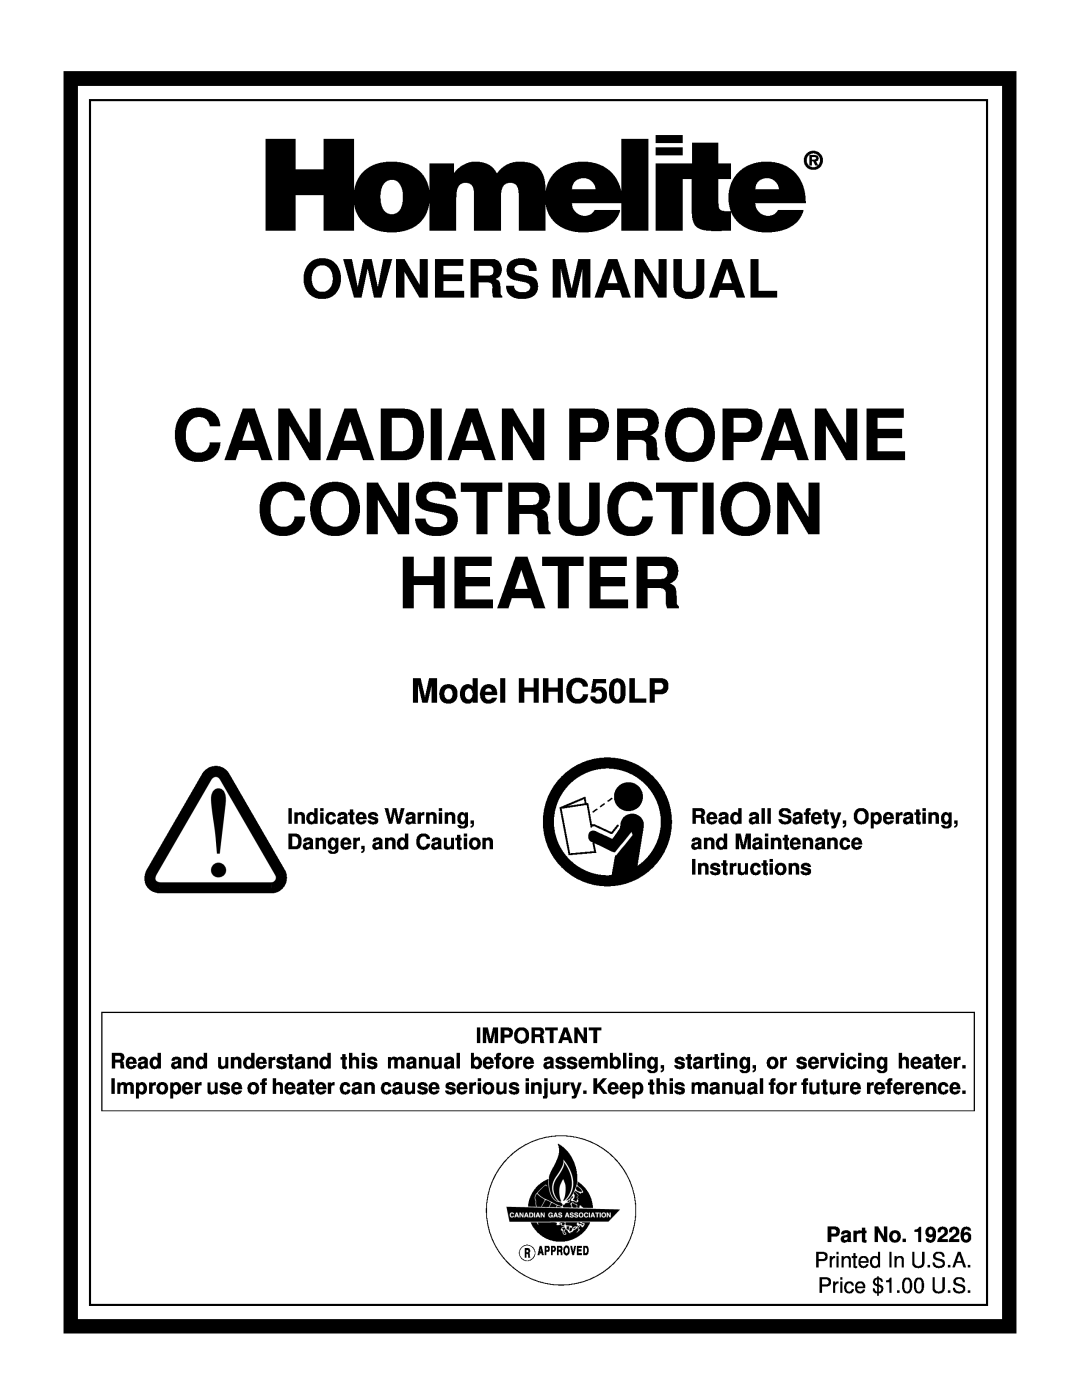 Homelite owner manual Canadian Propane Construction Heater, Model HHC50LP 